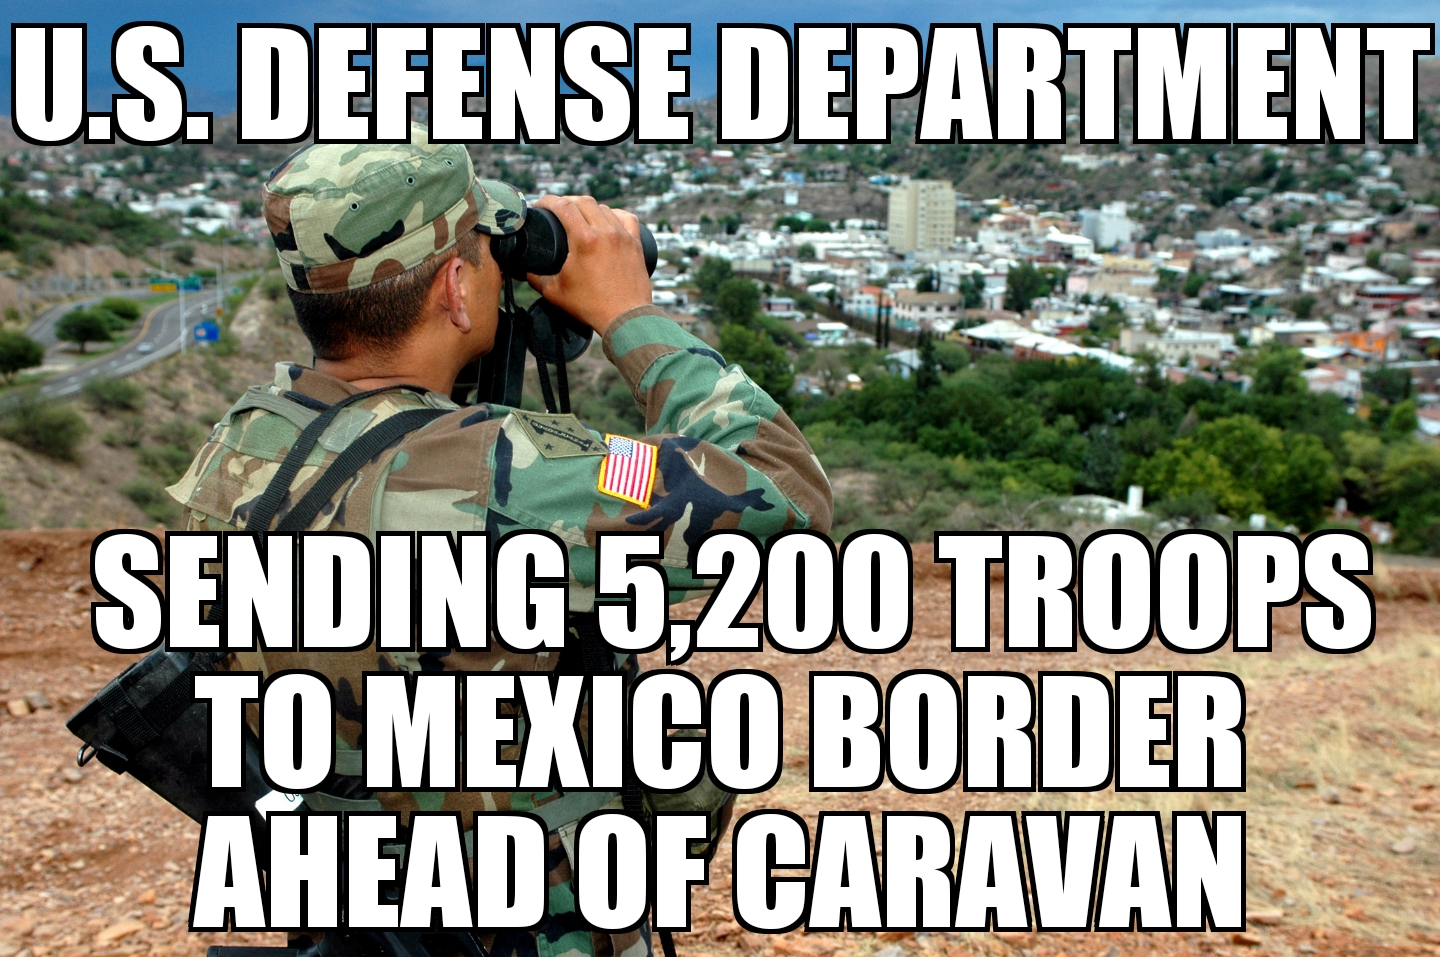 U.S. sending 5,200 troops to Mexico border